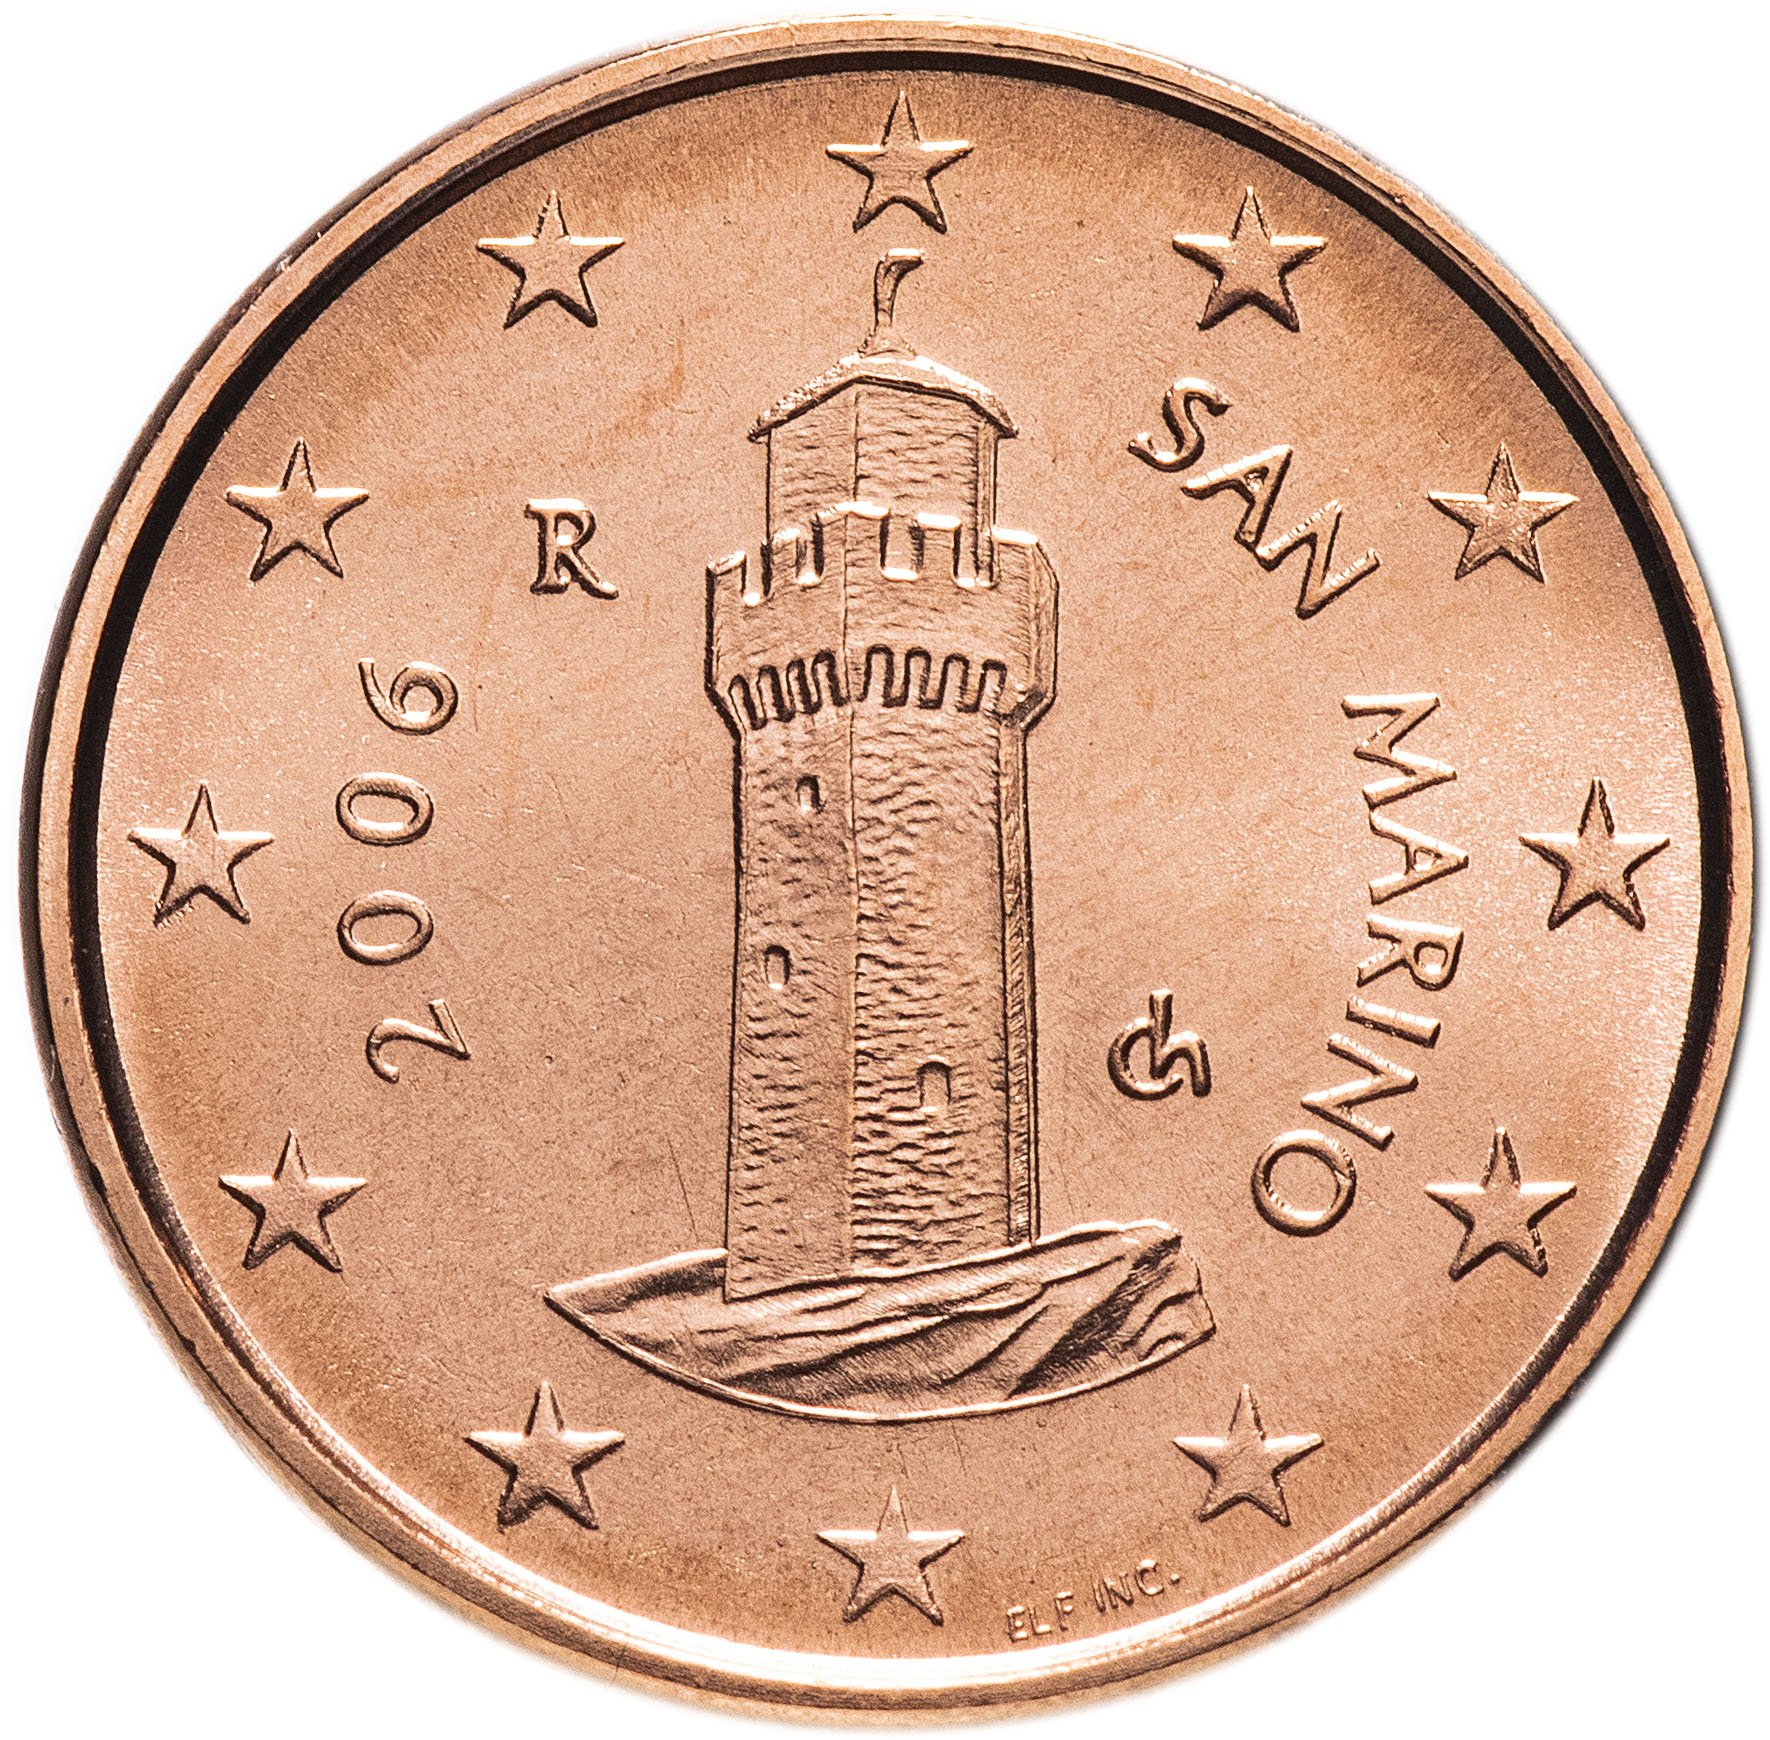 Евро сан марино. Сан Марино монеты 2 евроцента. 5 Евро цент Сан Марино 2002. 2 Евро цент Сан Марино 2002. 1 Евро цент Сан Марино 2002.